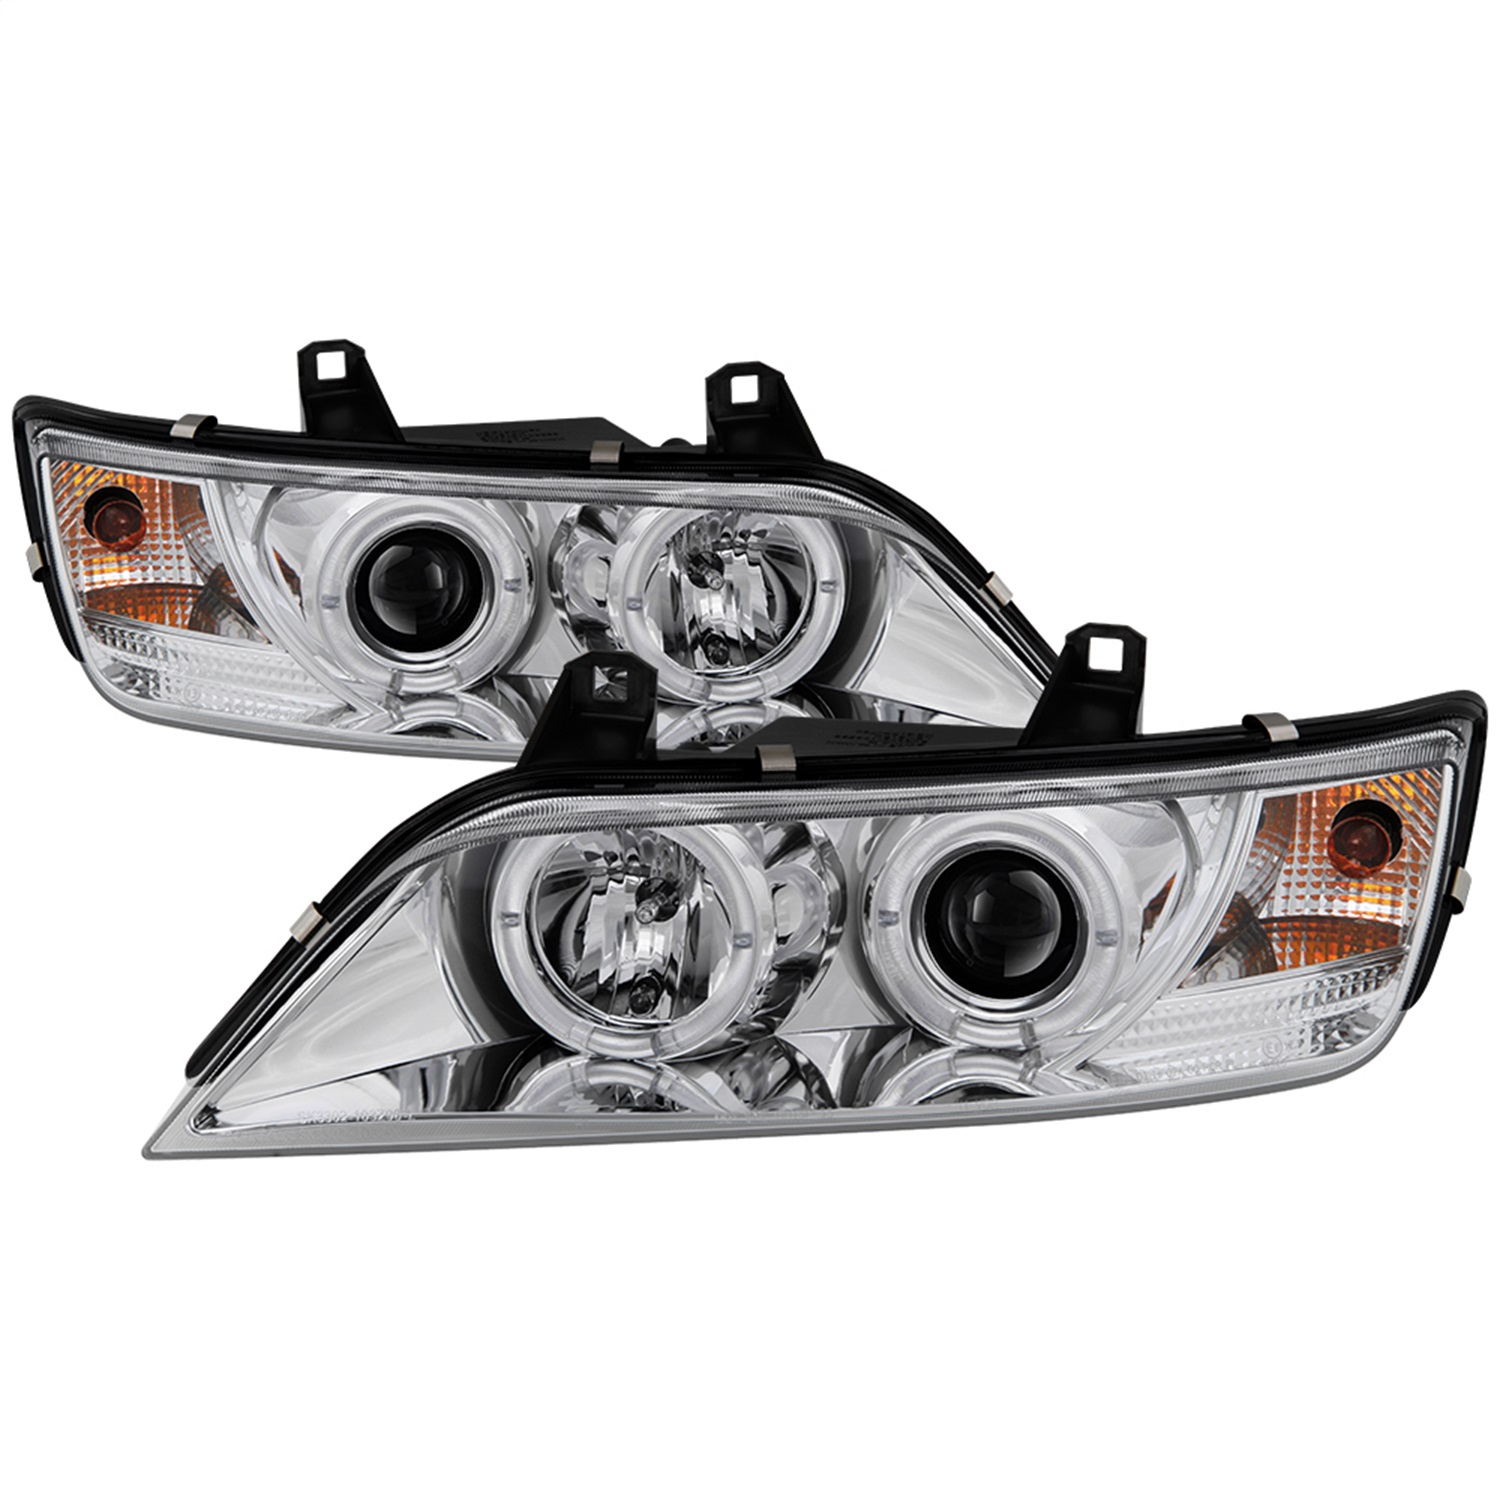 Spyder Auto 5009098 Halo Projector Headlights Fits 96-02 Z3